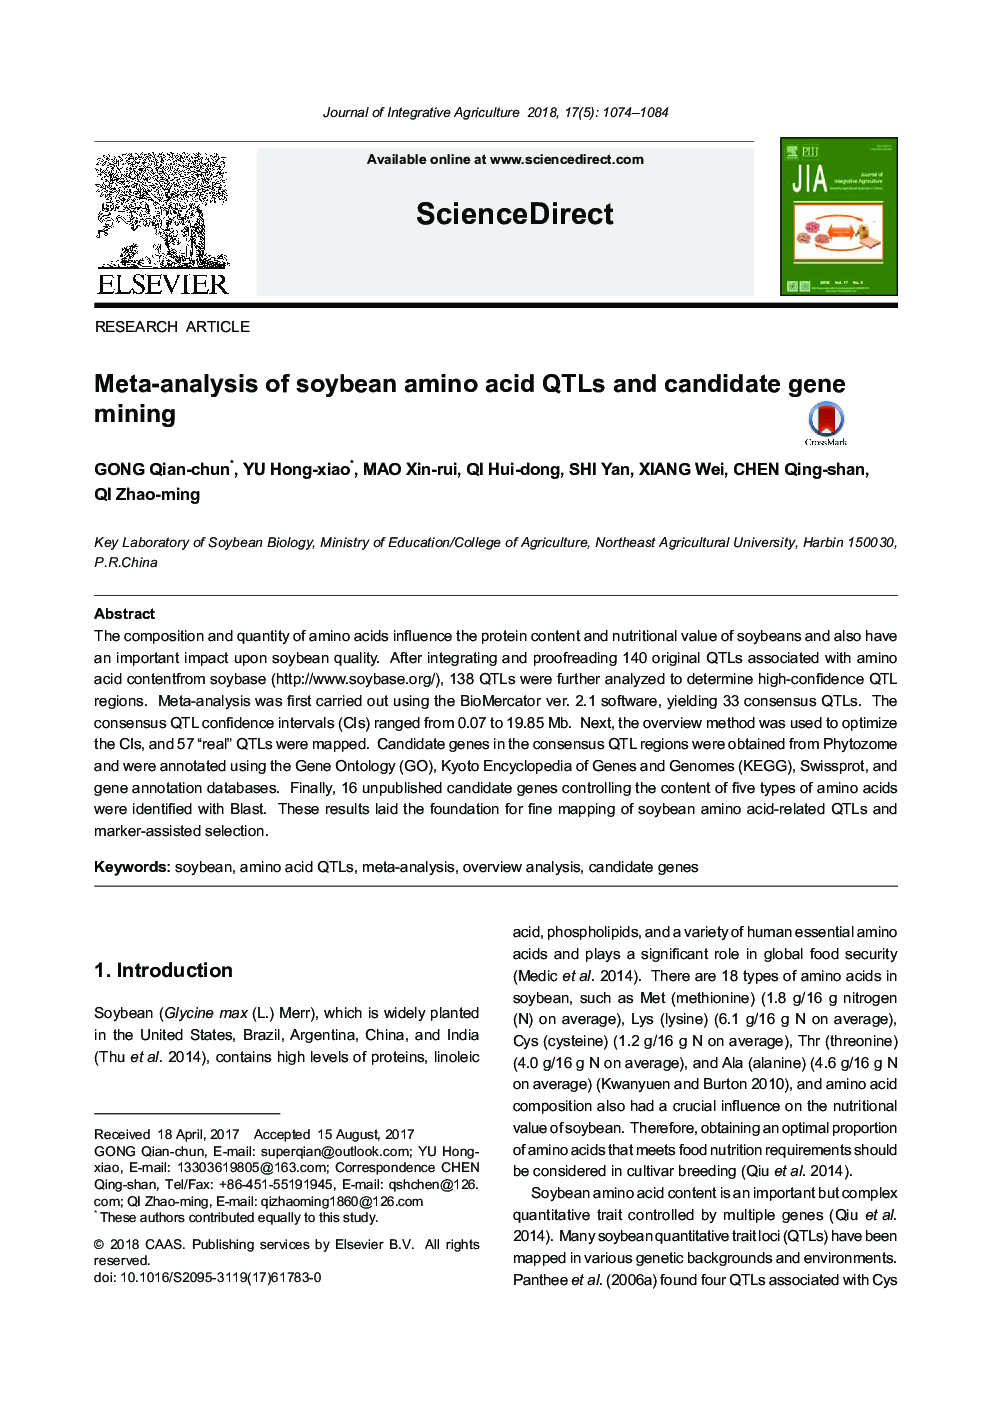 Meta-analysis of soybean amino acid QTLs and candidate gene mining